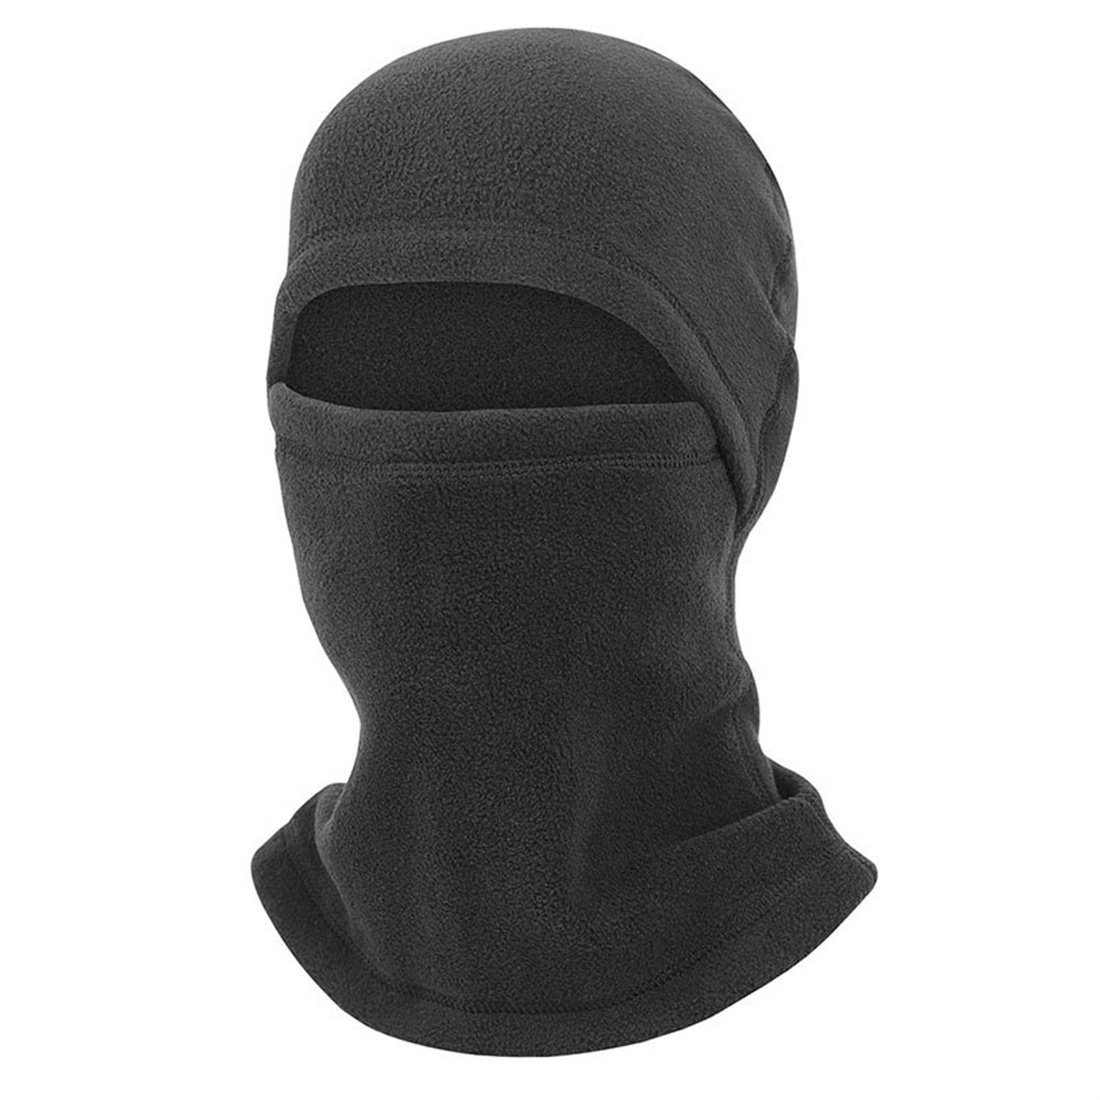 DÖRÖY Sturmhaube Winter Reiten Warme Schwarz Ski Kopfbedeckung Coldproof Maske,Multifunktionale